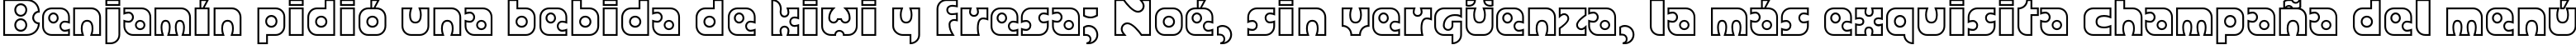 Пример написания шрифтом Joker Outline текста на испанском